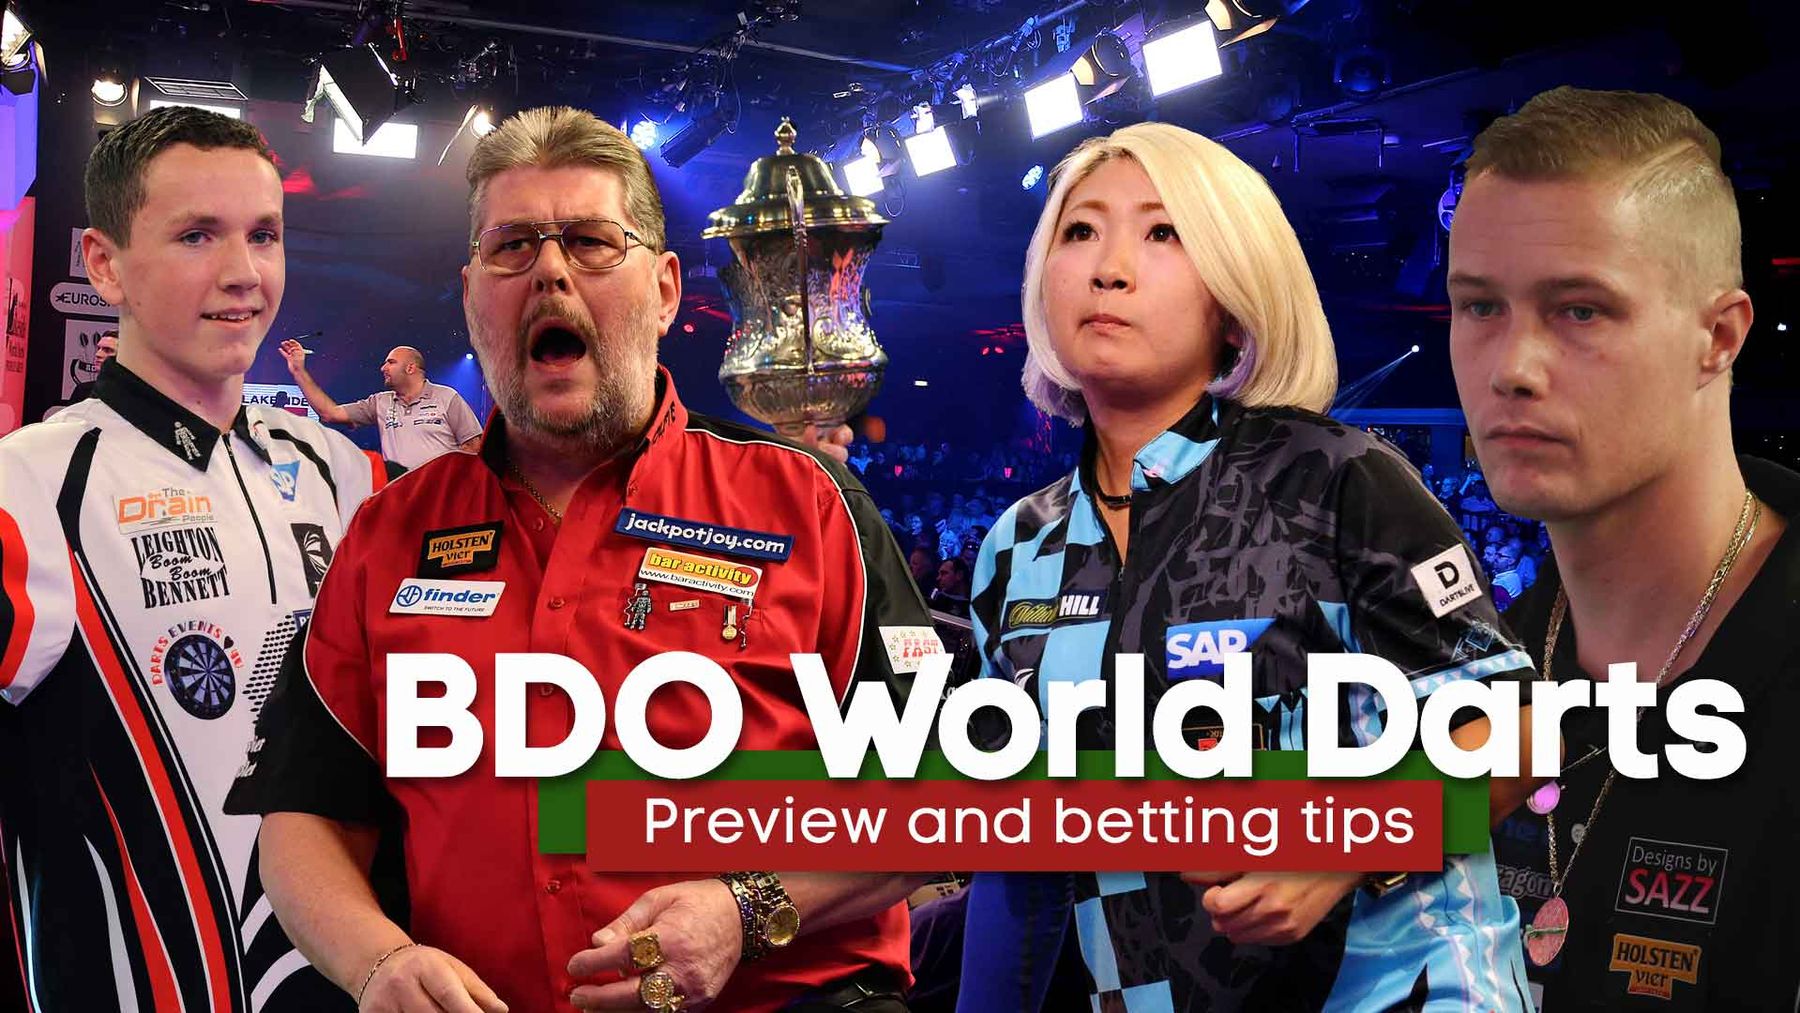 Bdo World Darts Championships Free Darts Betting Tips Preview And